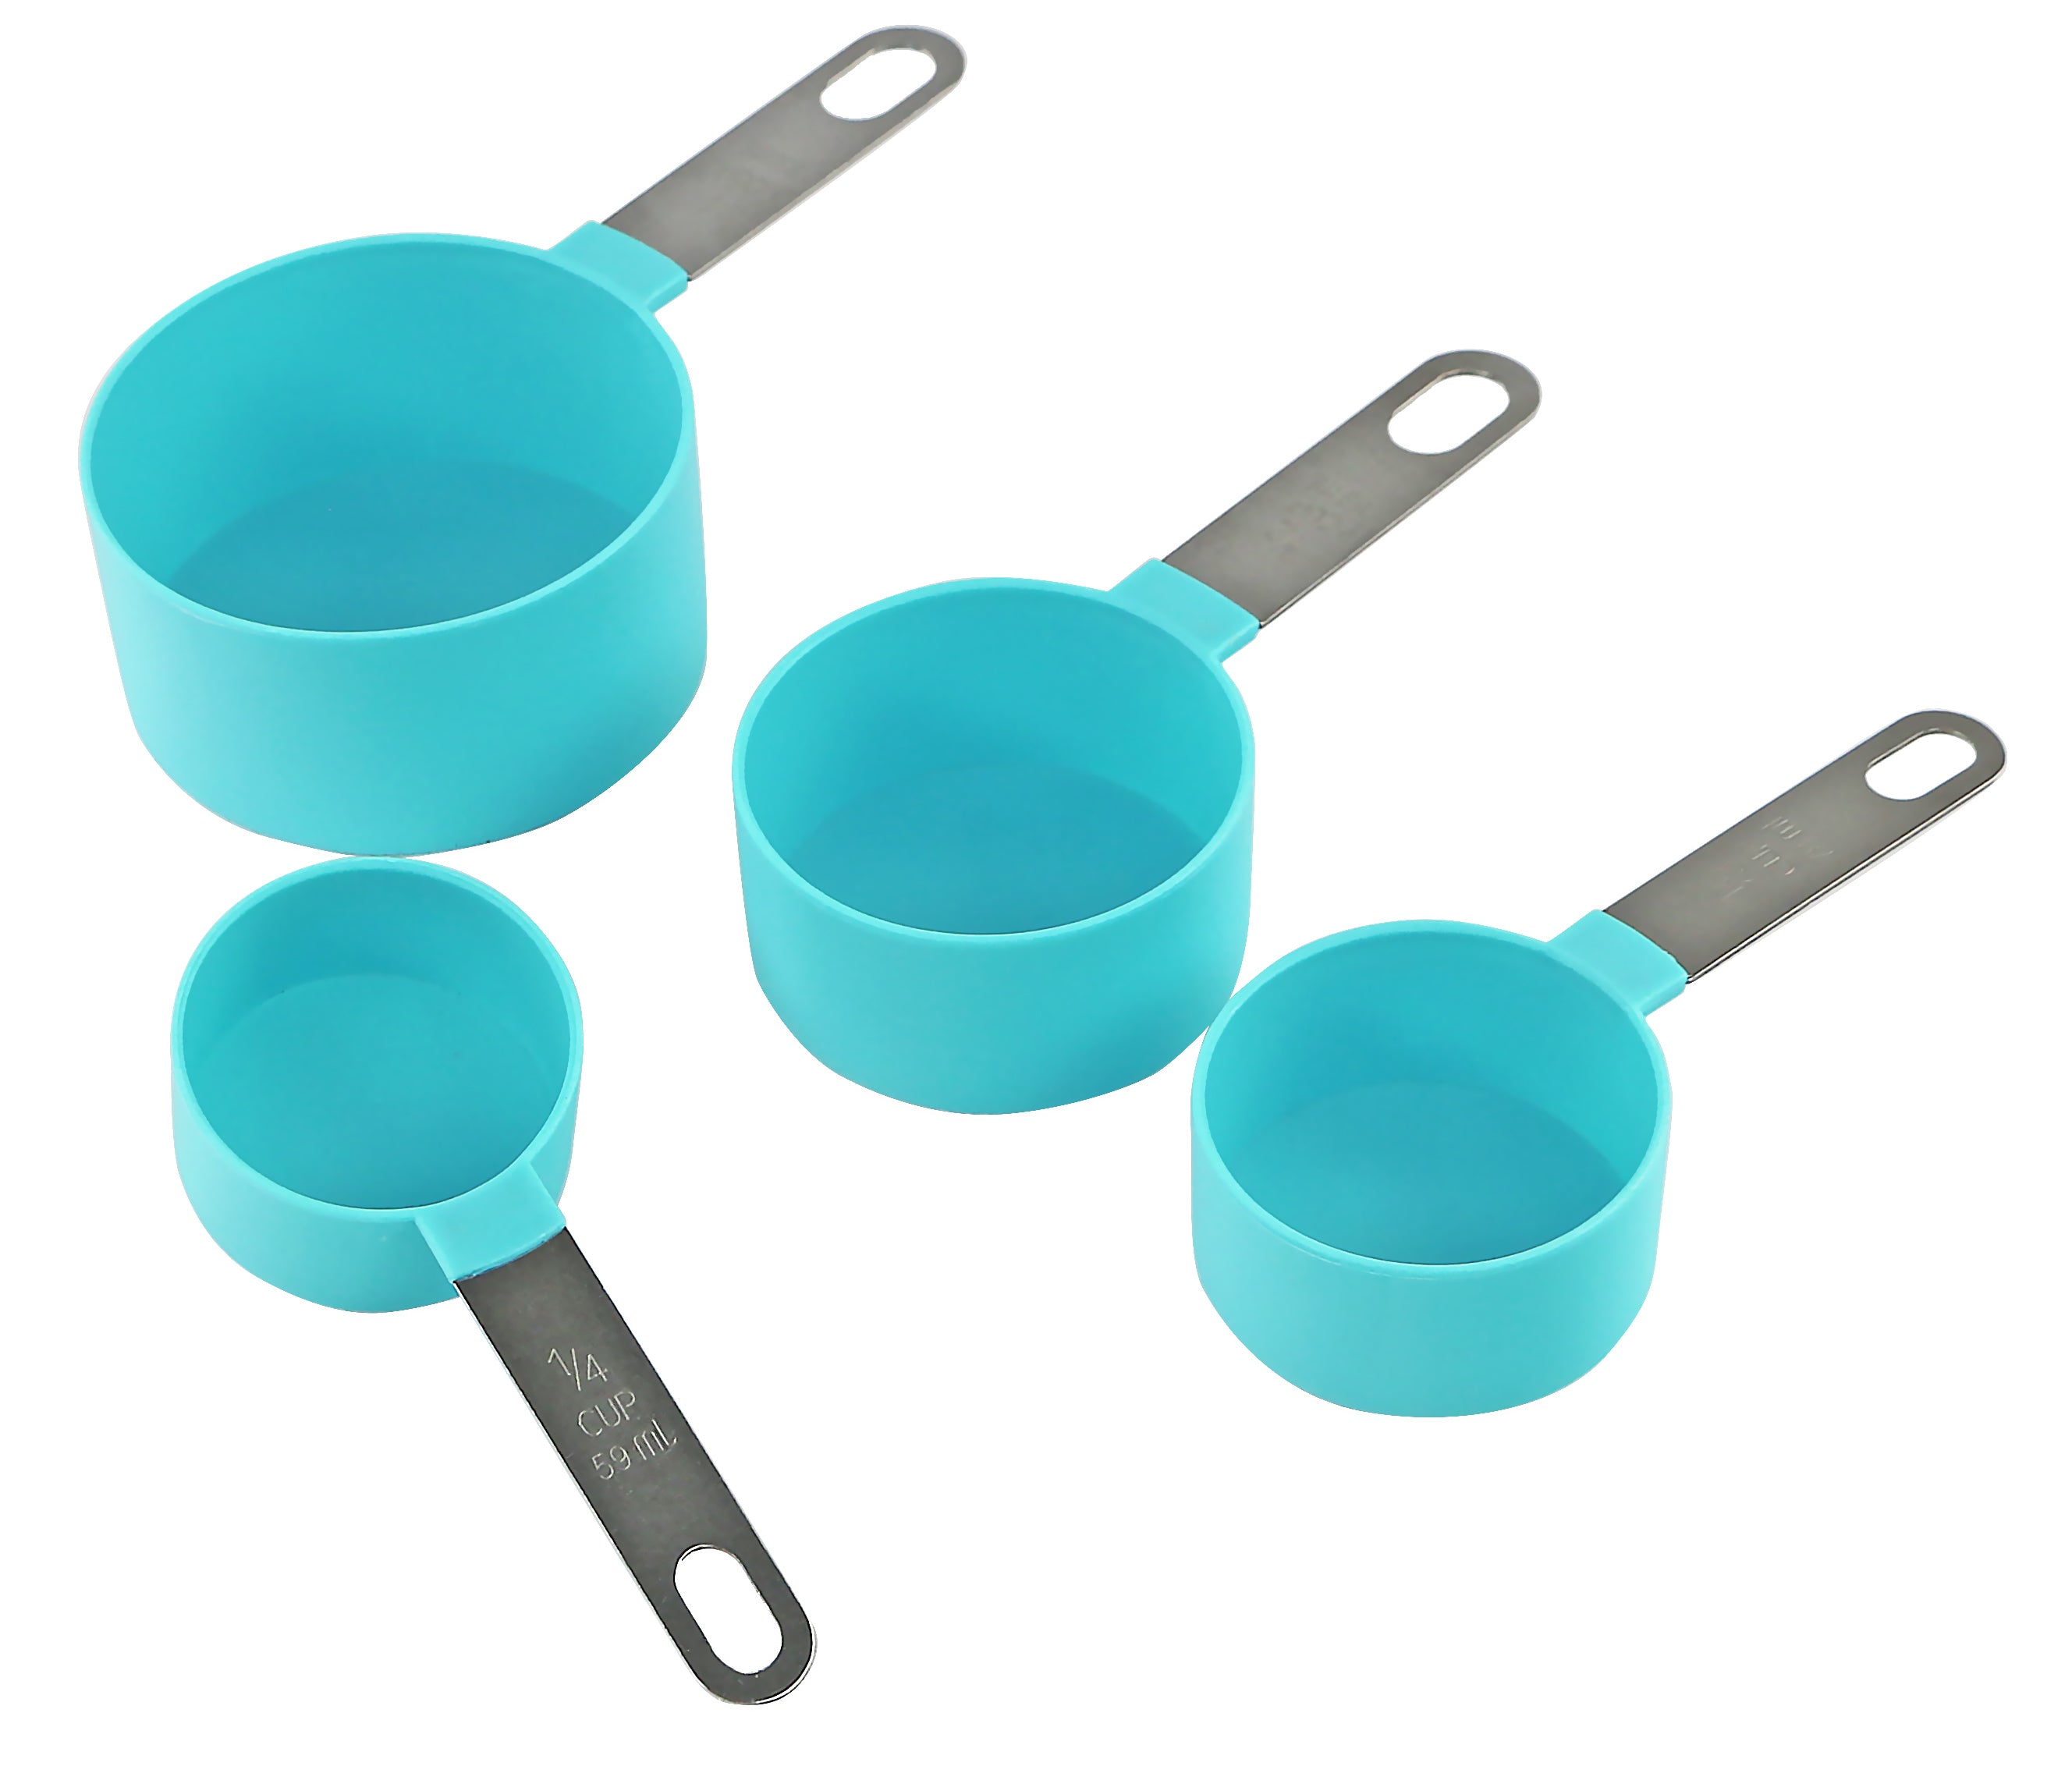 8pc Measuring Spoon & Cup Set, Black – Reston Lloyd